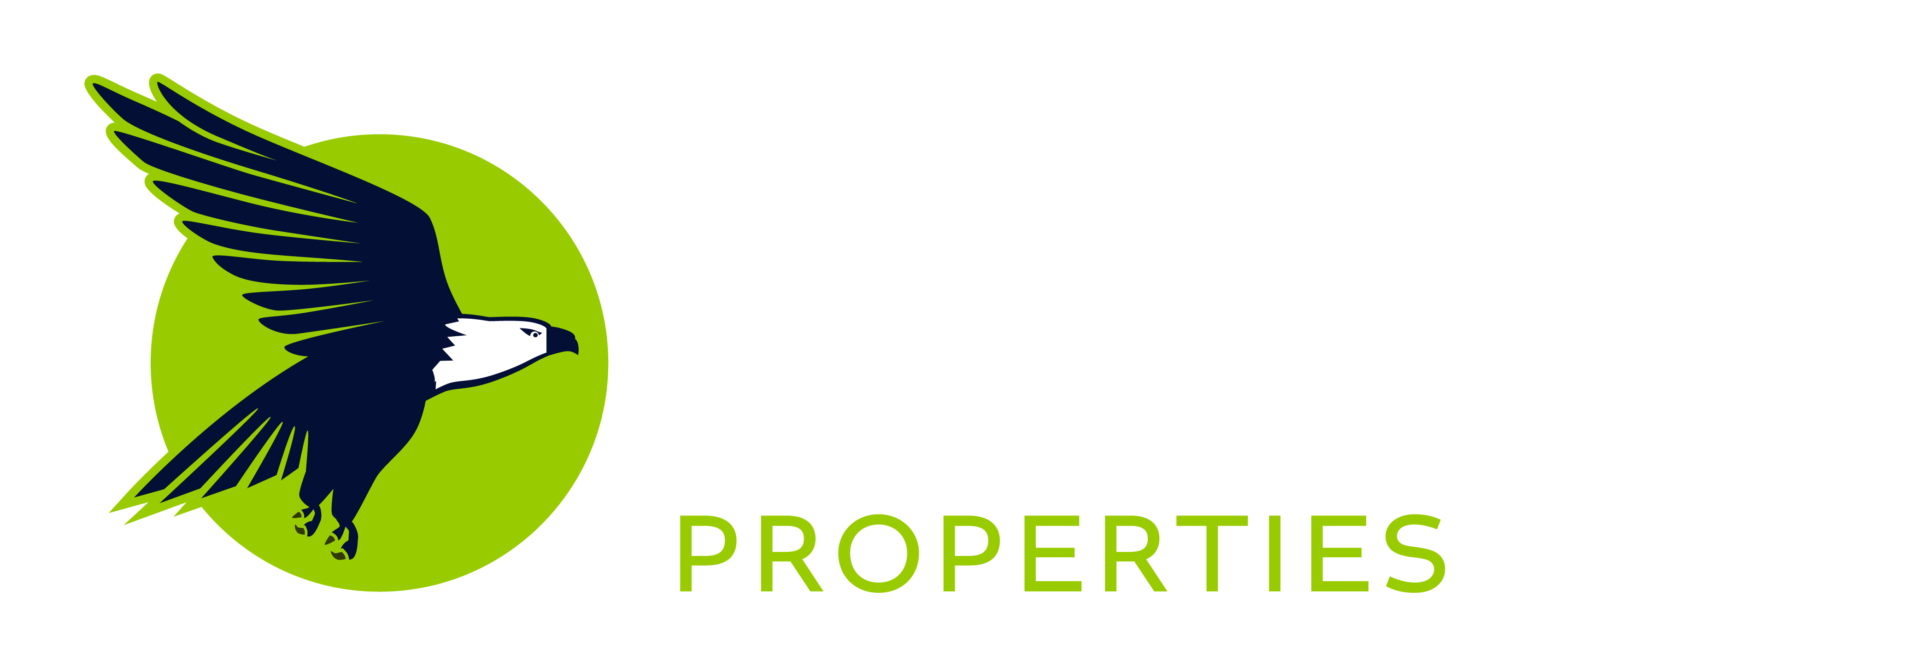 Freedom Point Properties logo